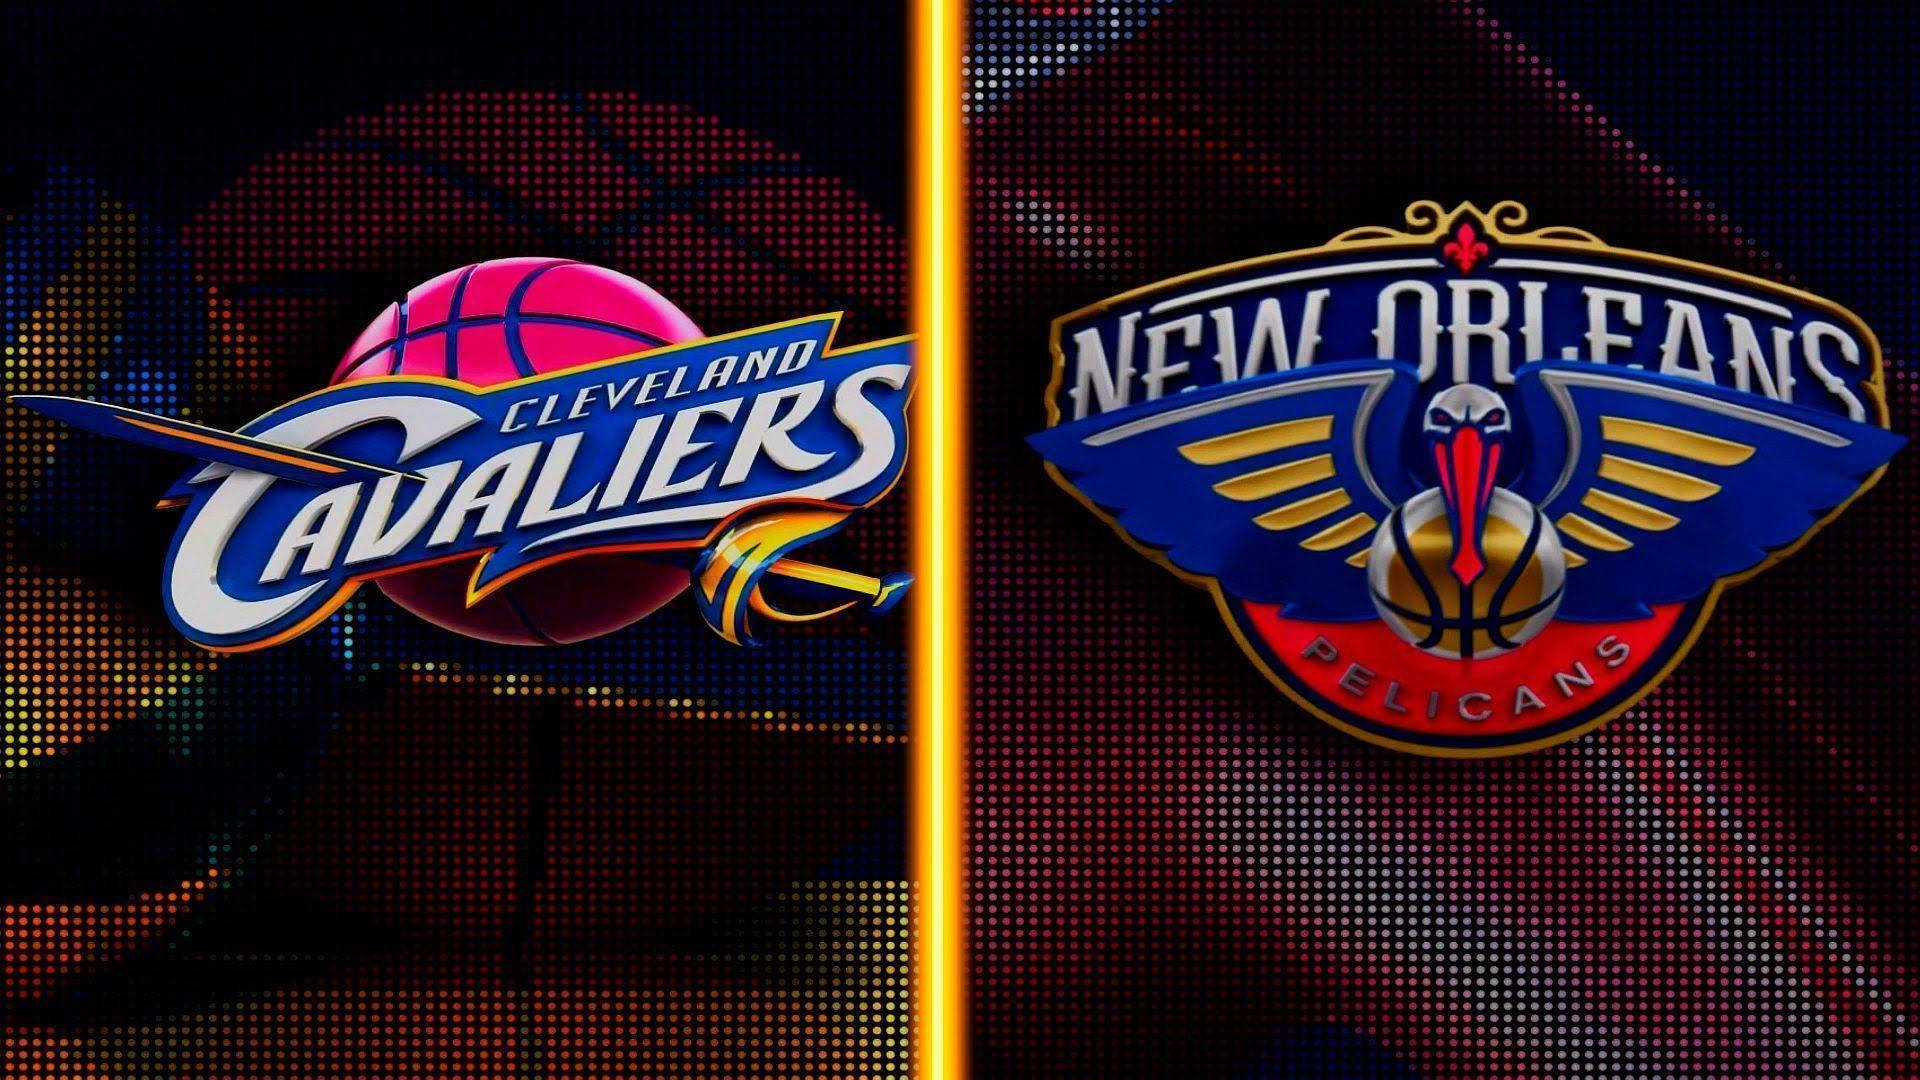 New Orleans Pelicans Vs Cavaliers Background